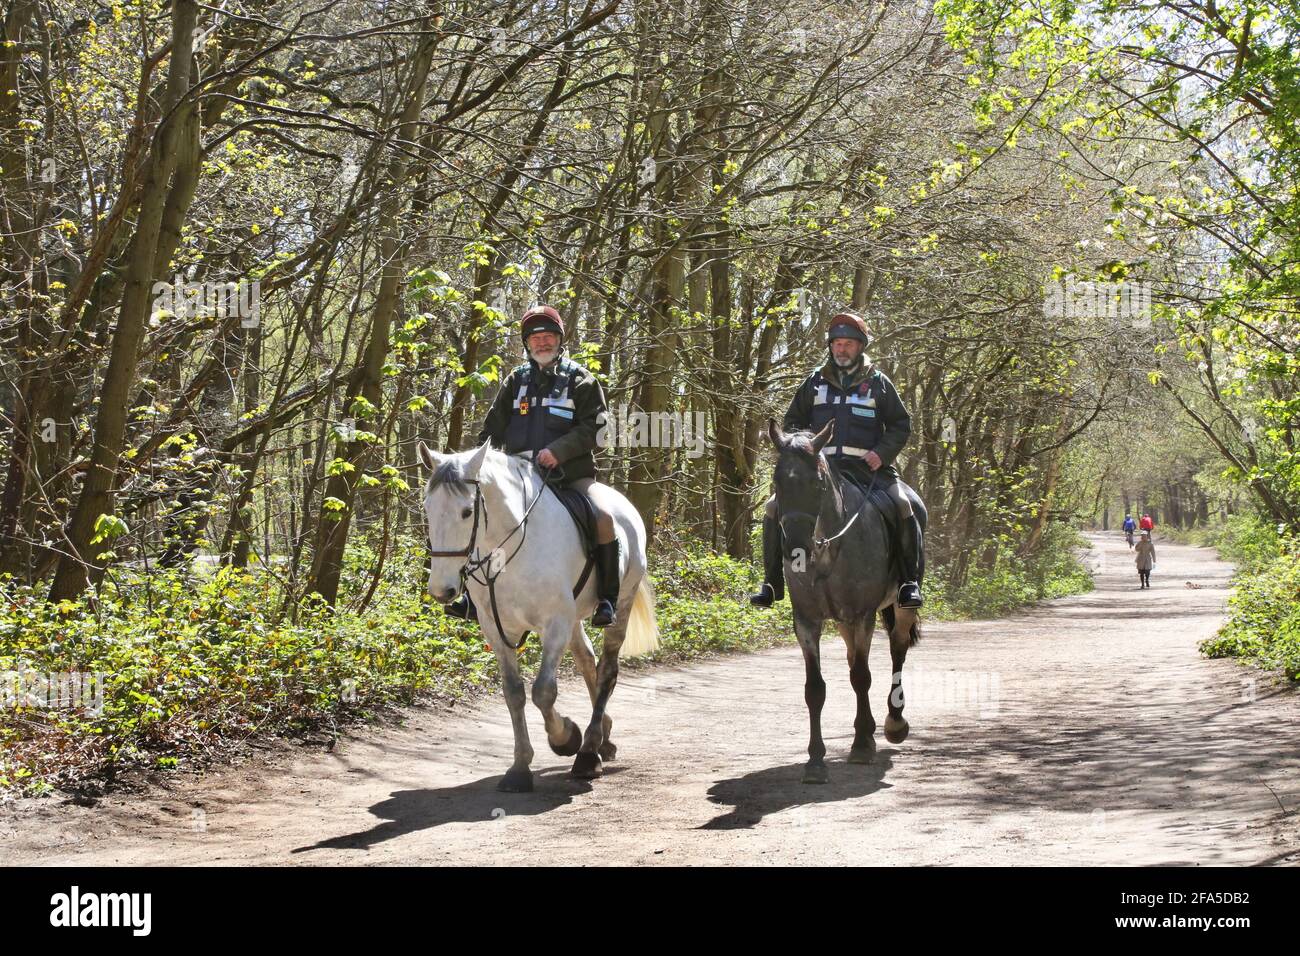 Wimbledon Common rangers on horseback ride through woodland on Wimbledon Common, south west London, UK. Stock Photo